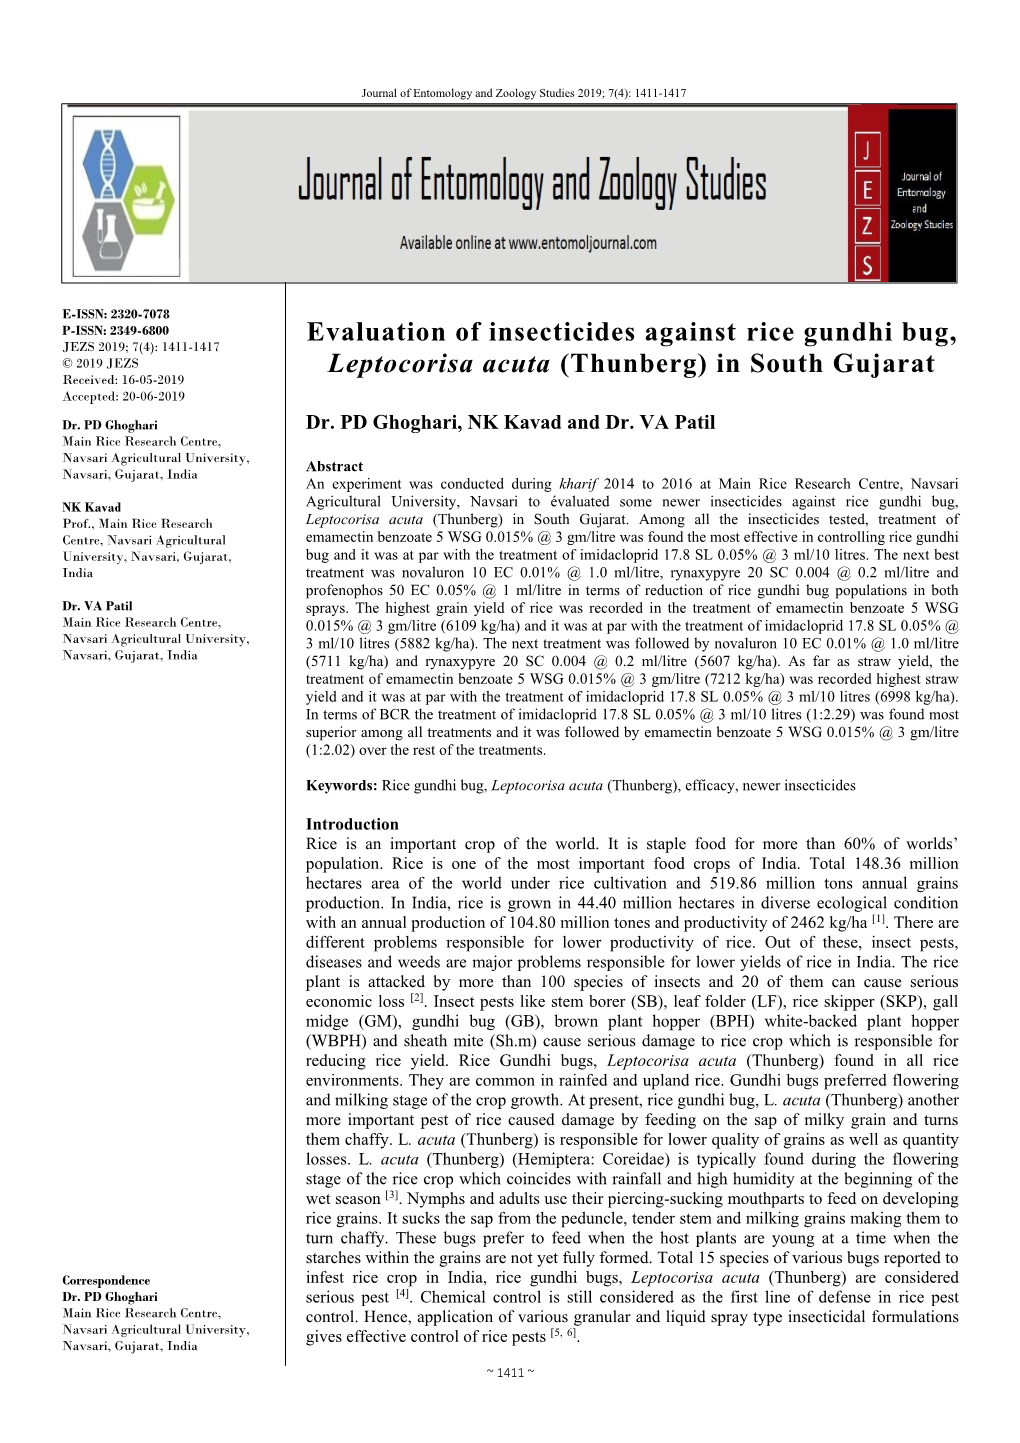 Evaluation of Insecticides Against Rice Gundhi Bug, Leptocorisa Acuta